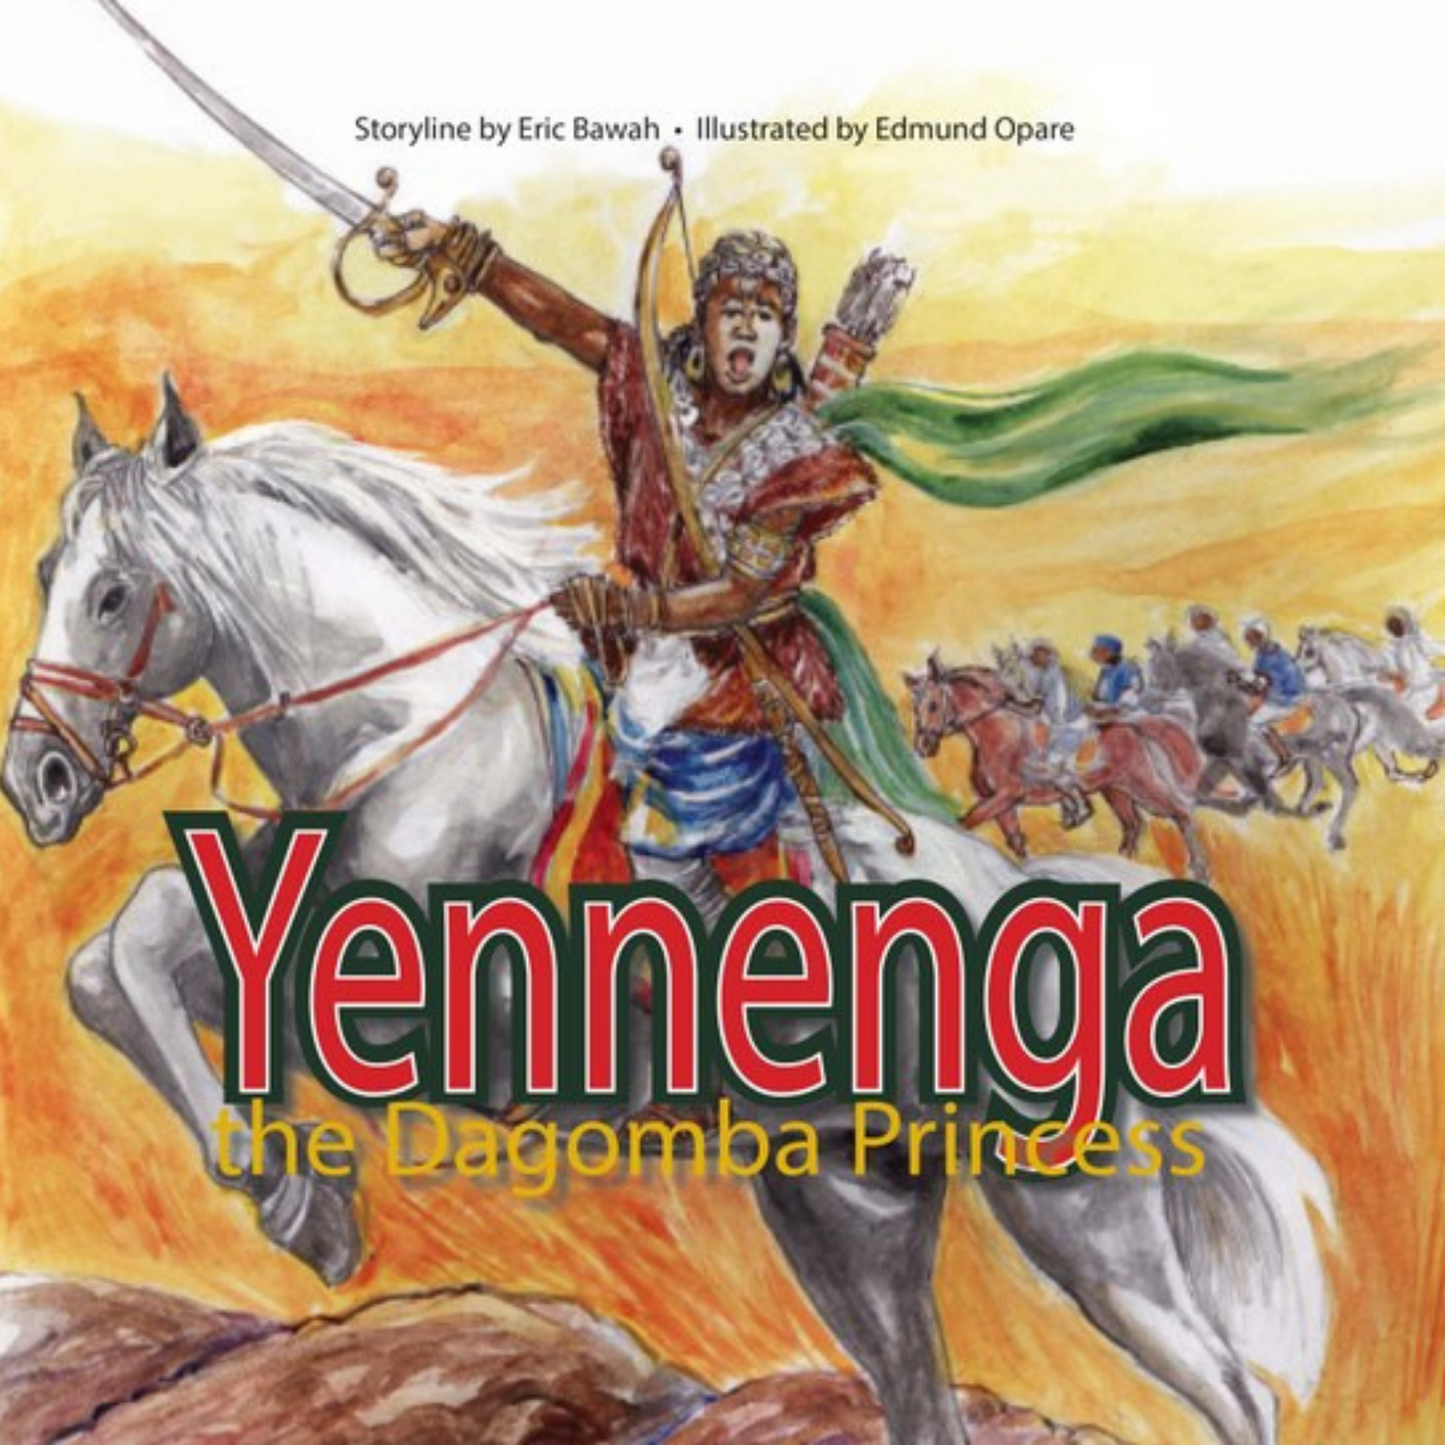 Yennenga: The Dagomba Princess